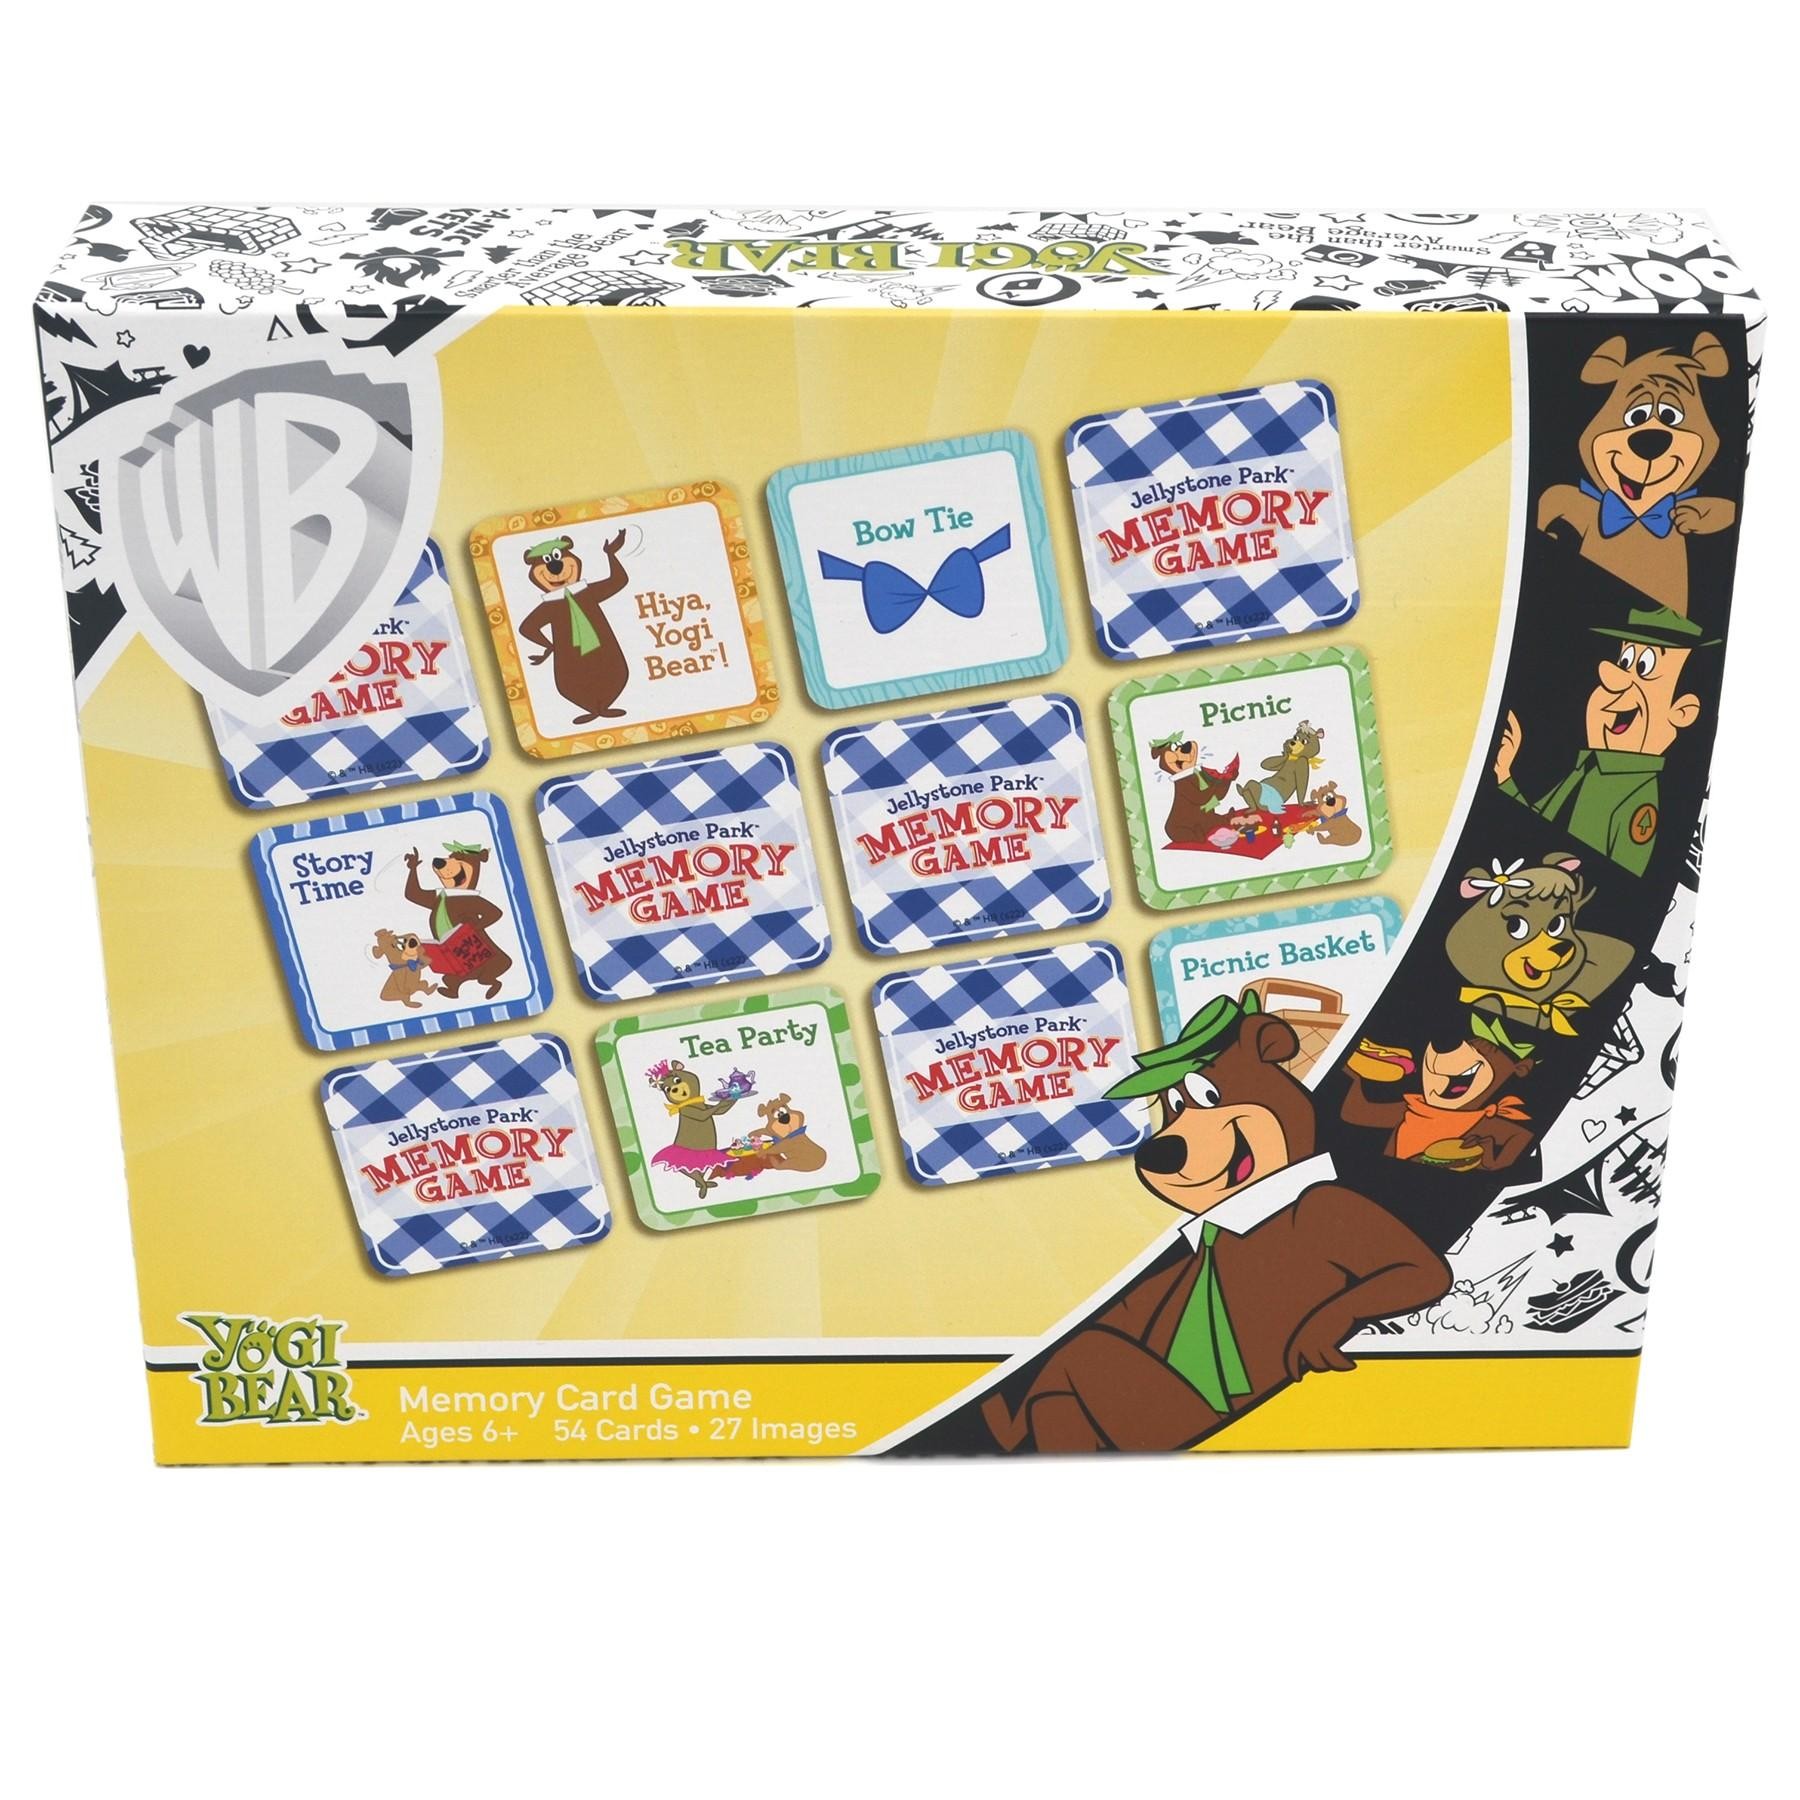 Yogi Bear Memory Card Game